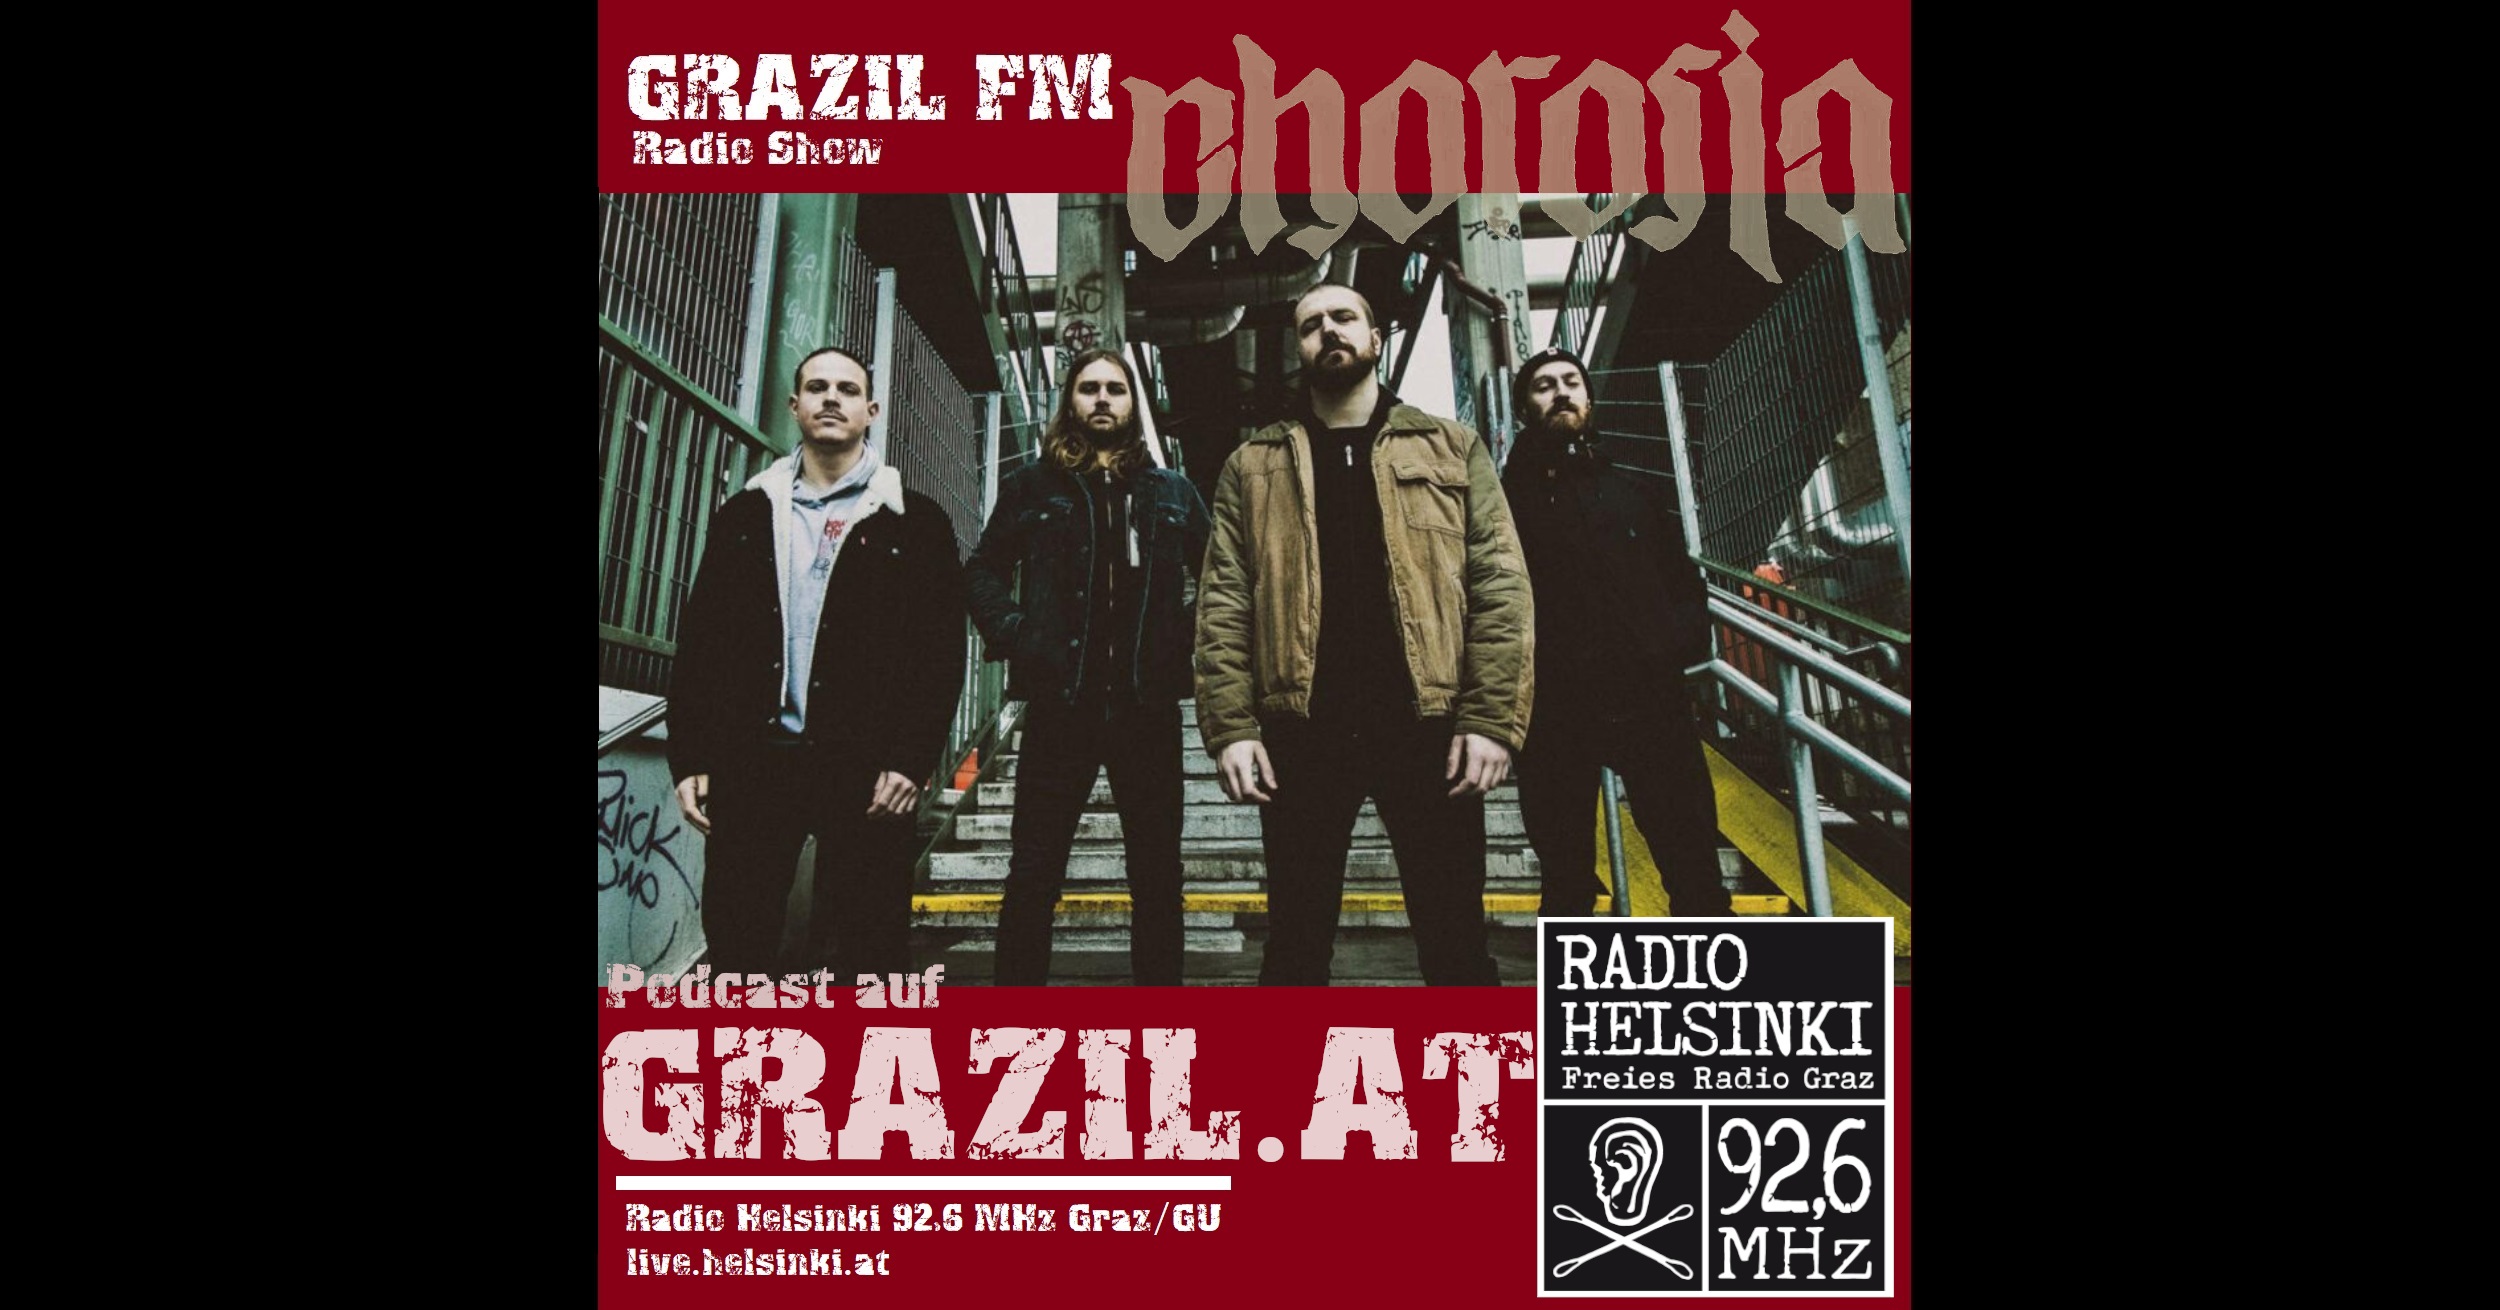 grazil FM Chorosia Podcast grazil Records Kvlt und Kaos Cle Pecher Radio Helsinki